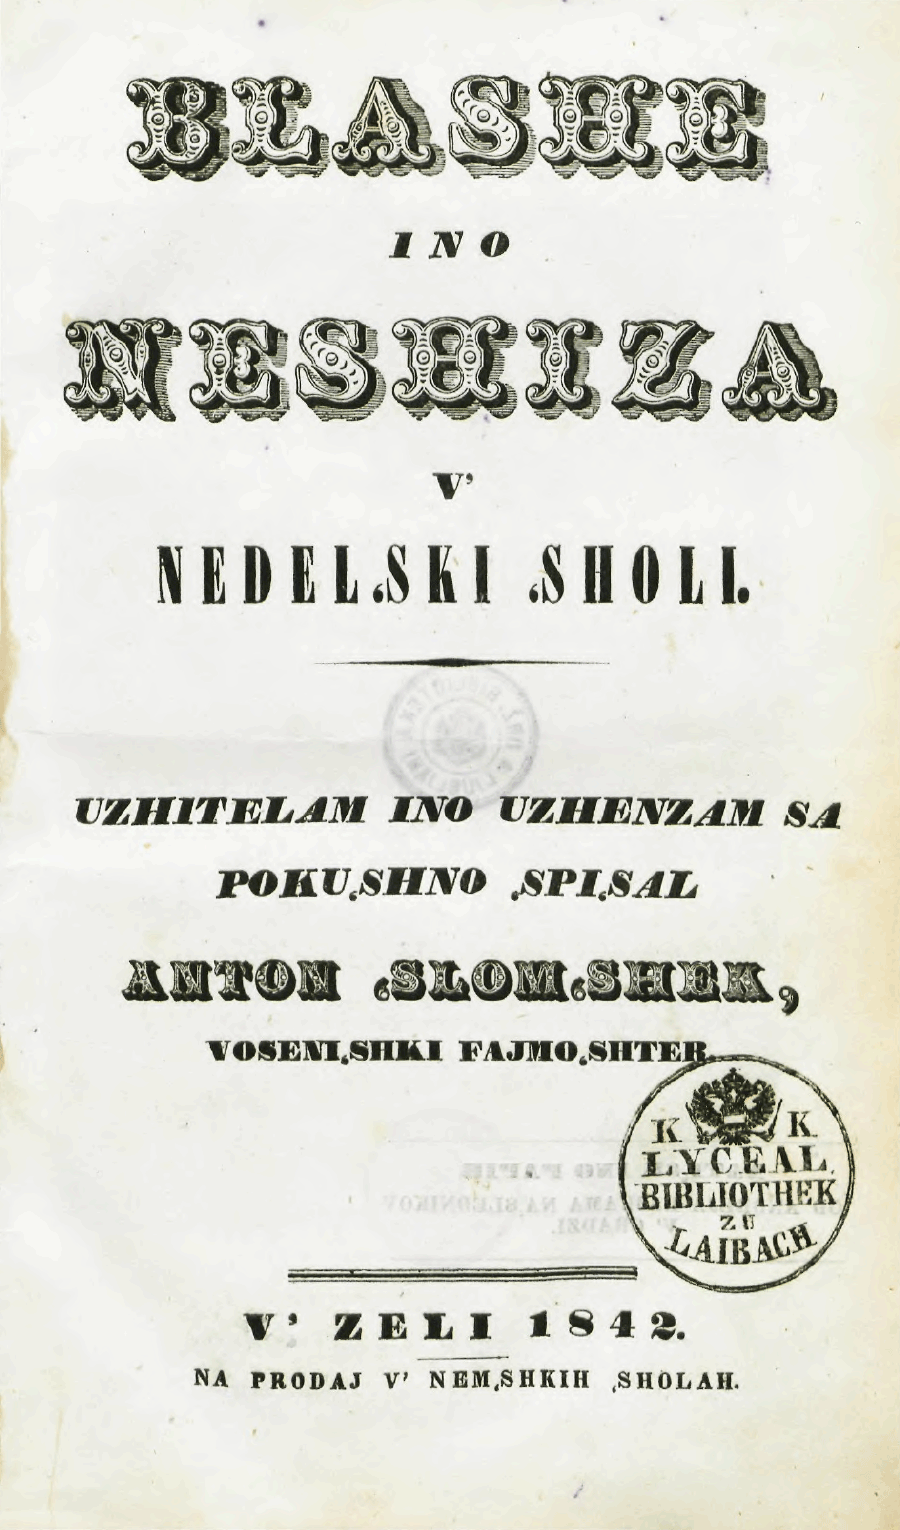 Anton Martin Slomšek, Blashe ino Neshiza v' nedelşki şholi, 1842.